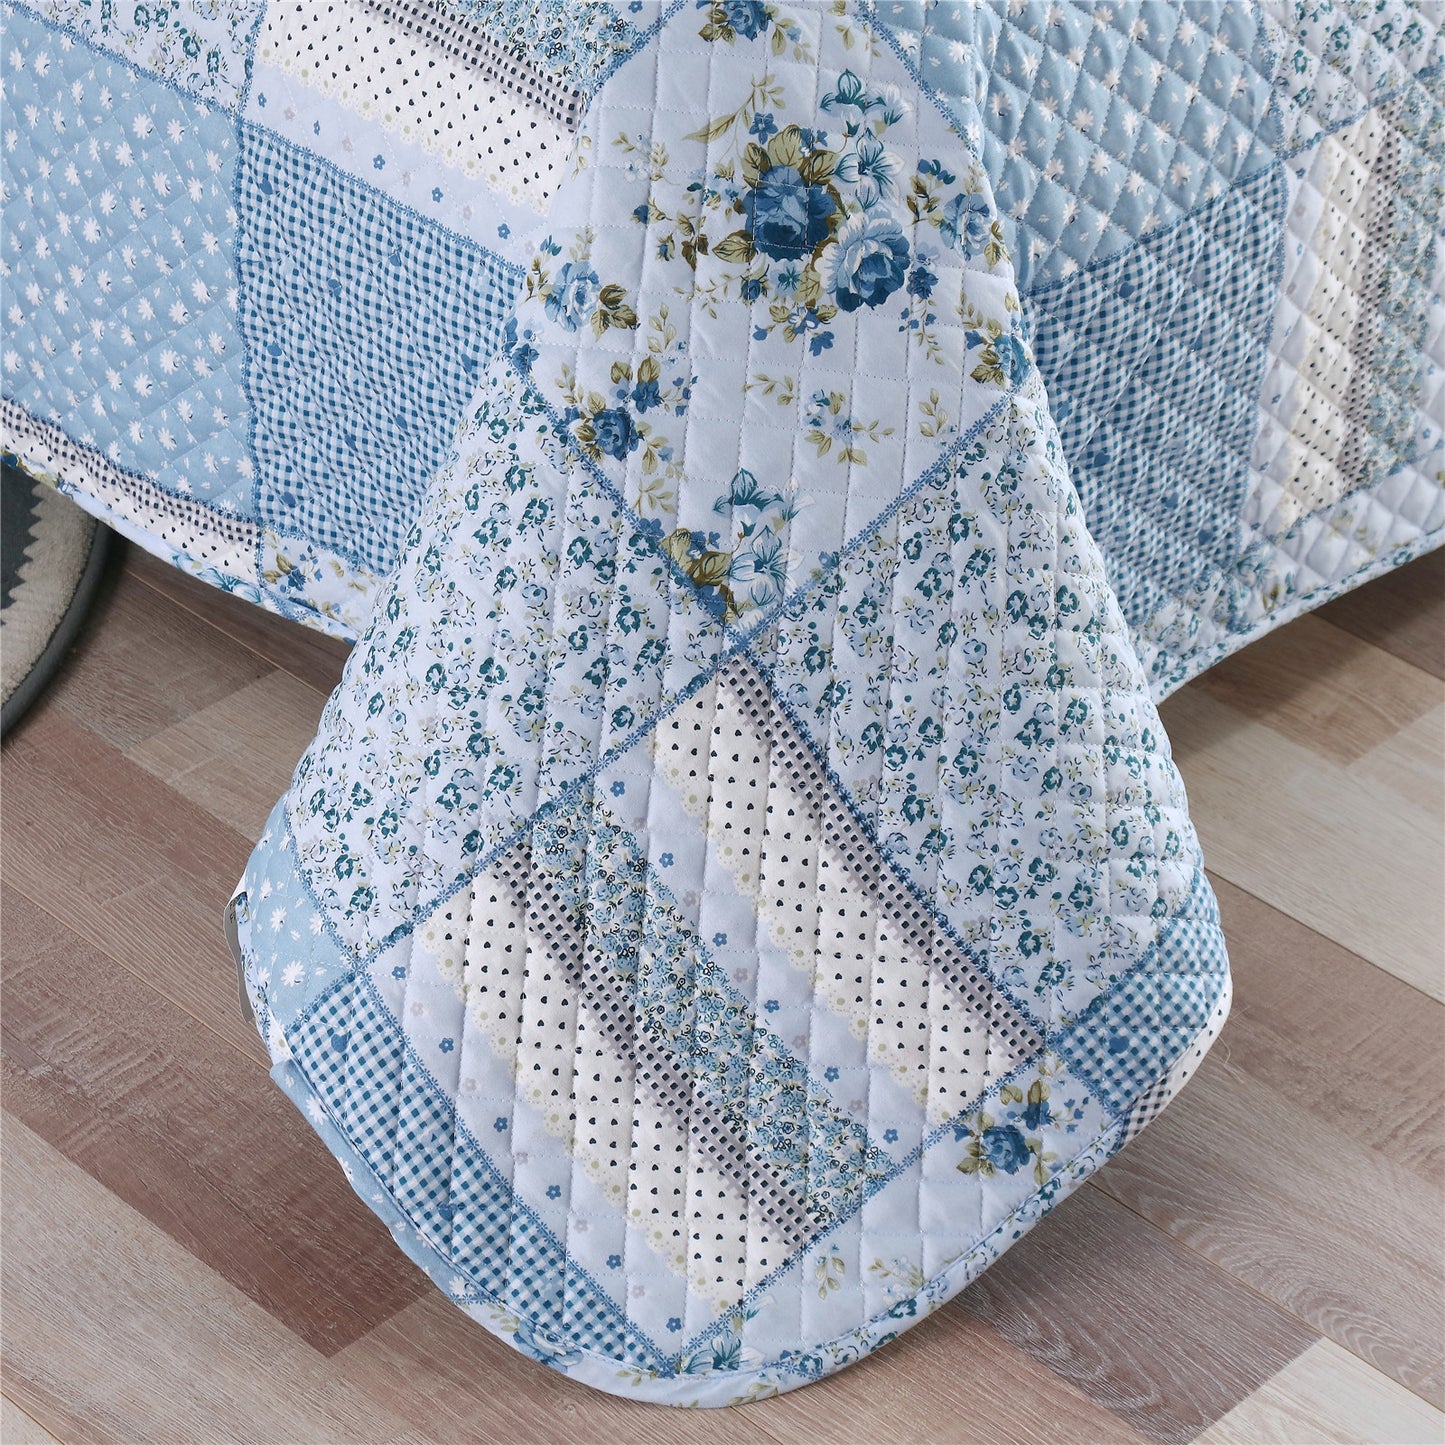 WongsBedding Blue Floral Patchwork Quilt Bedspread Sets 3 Pieces Quilt Set With 2 Pillowshams